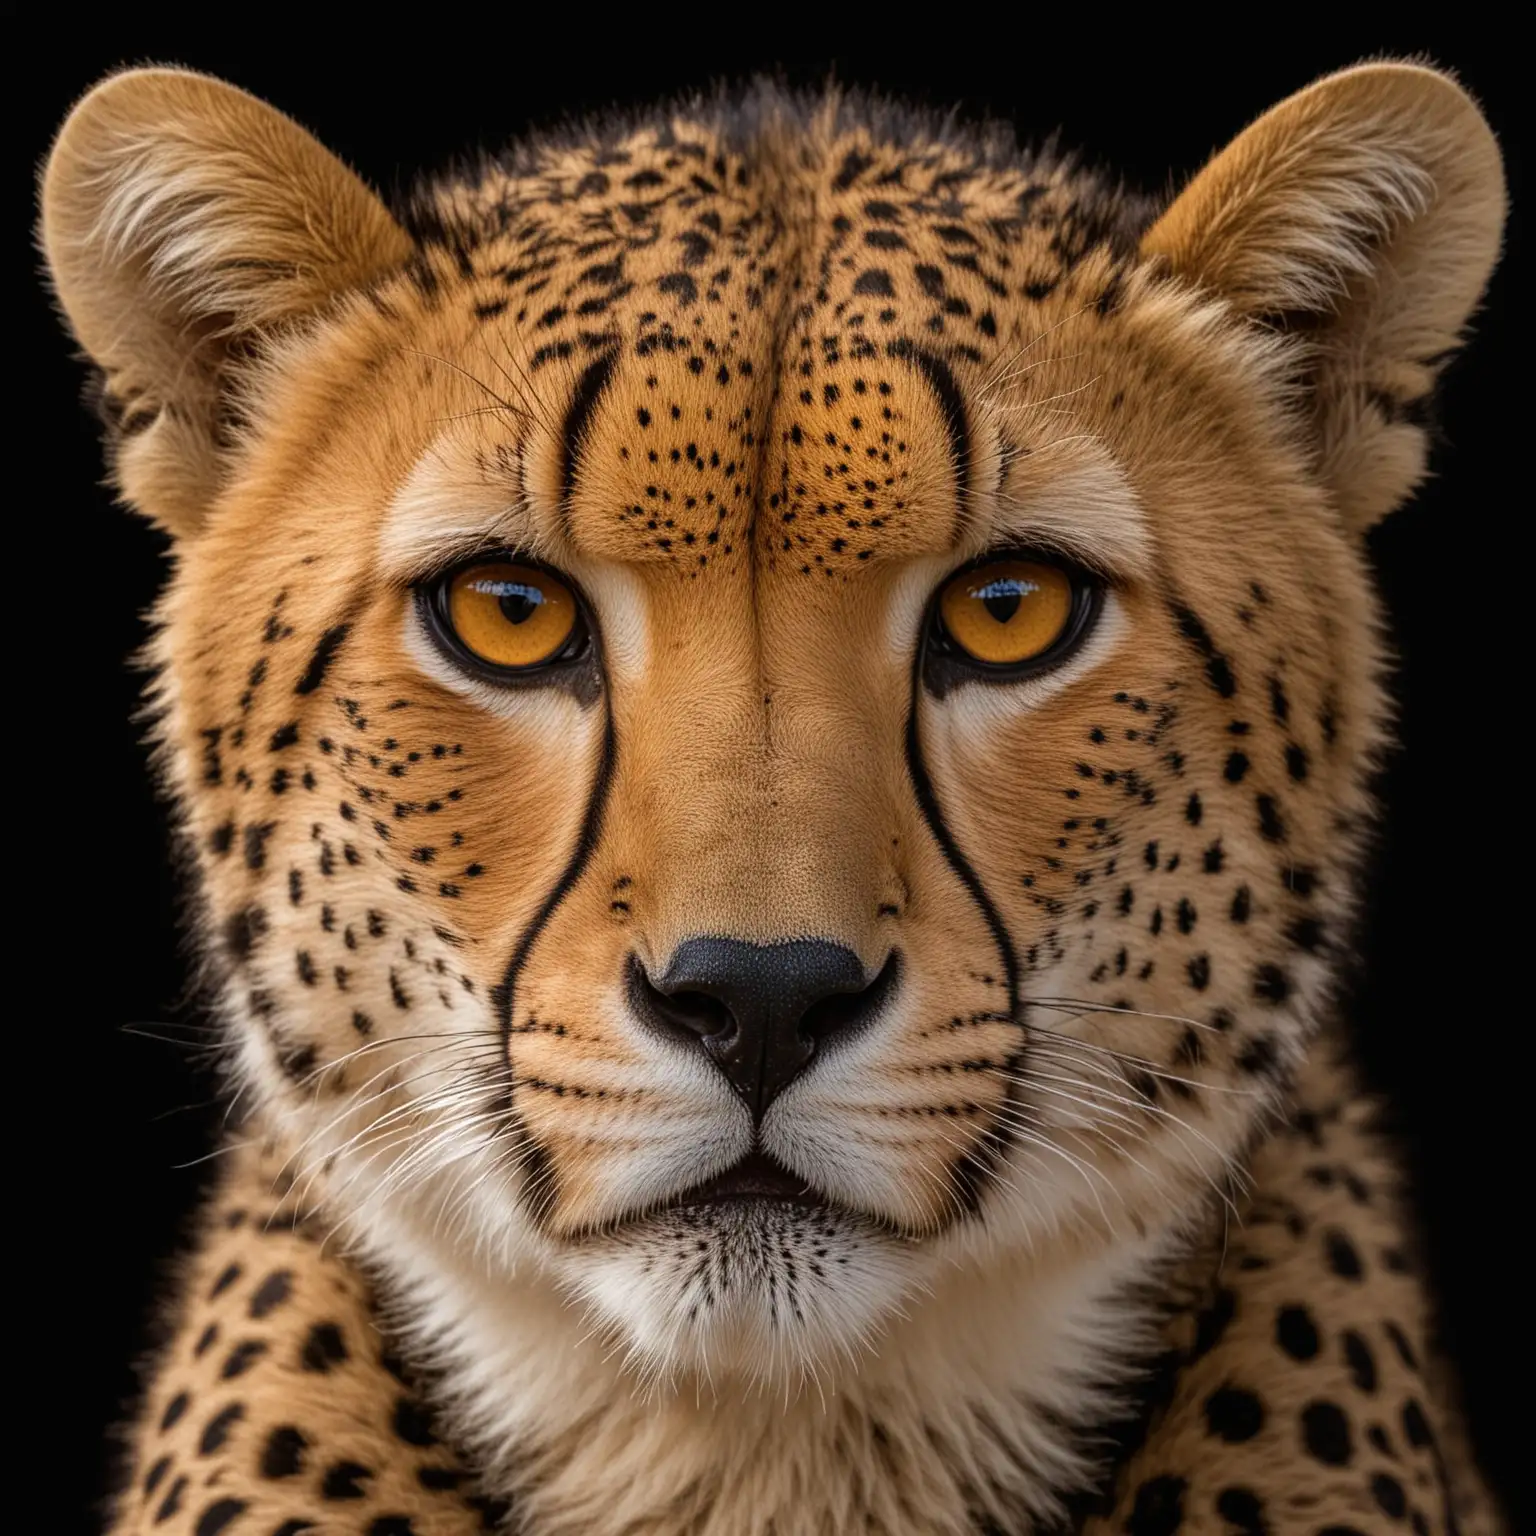 CloseUp Portrait of a Cheetah on Black Background